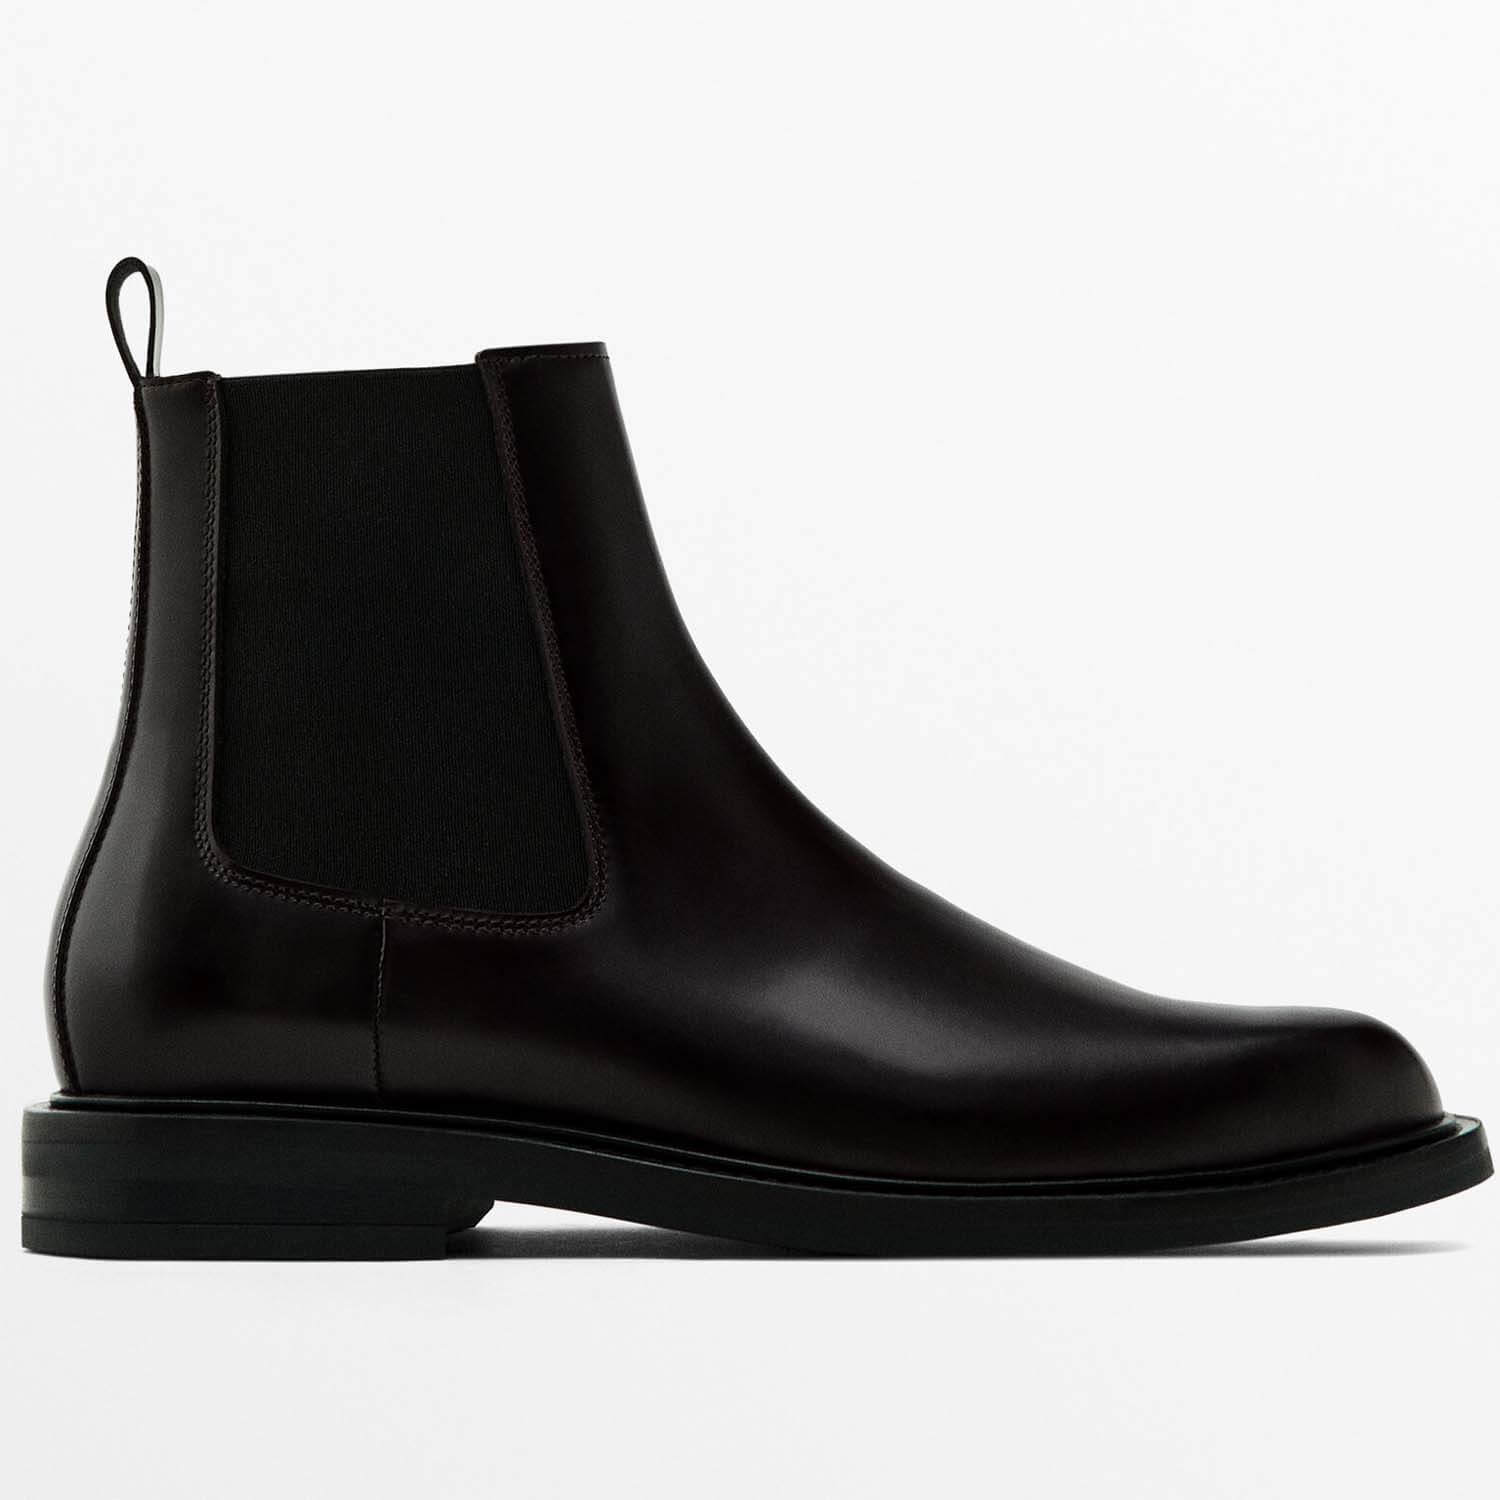 Ботинки Massimo Dutti Leather Sock, коричневый ботинки massimo dutti leather boots limited edition коричневый